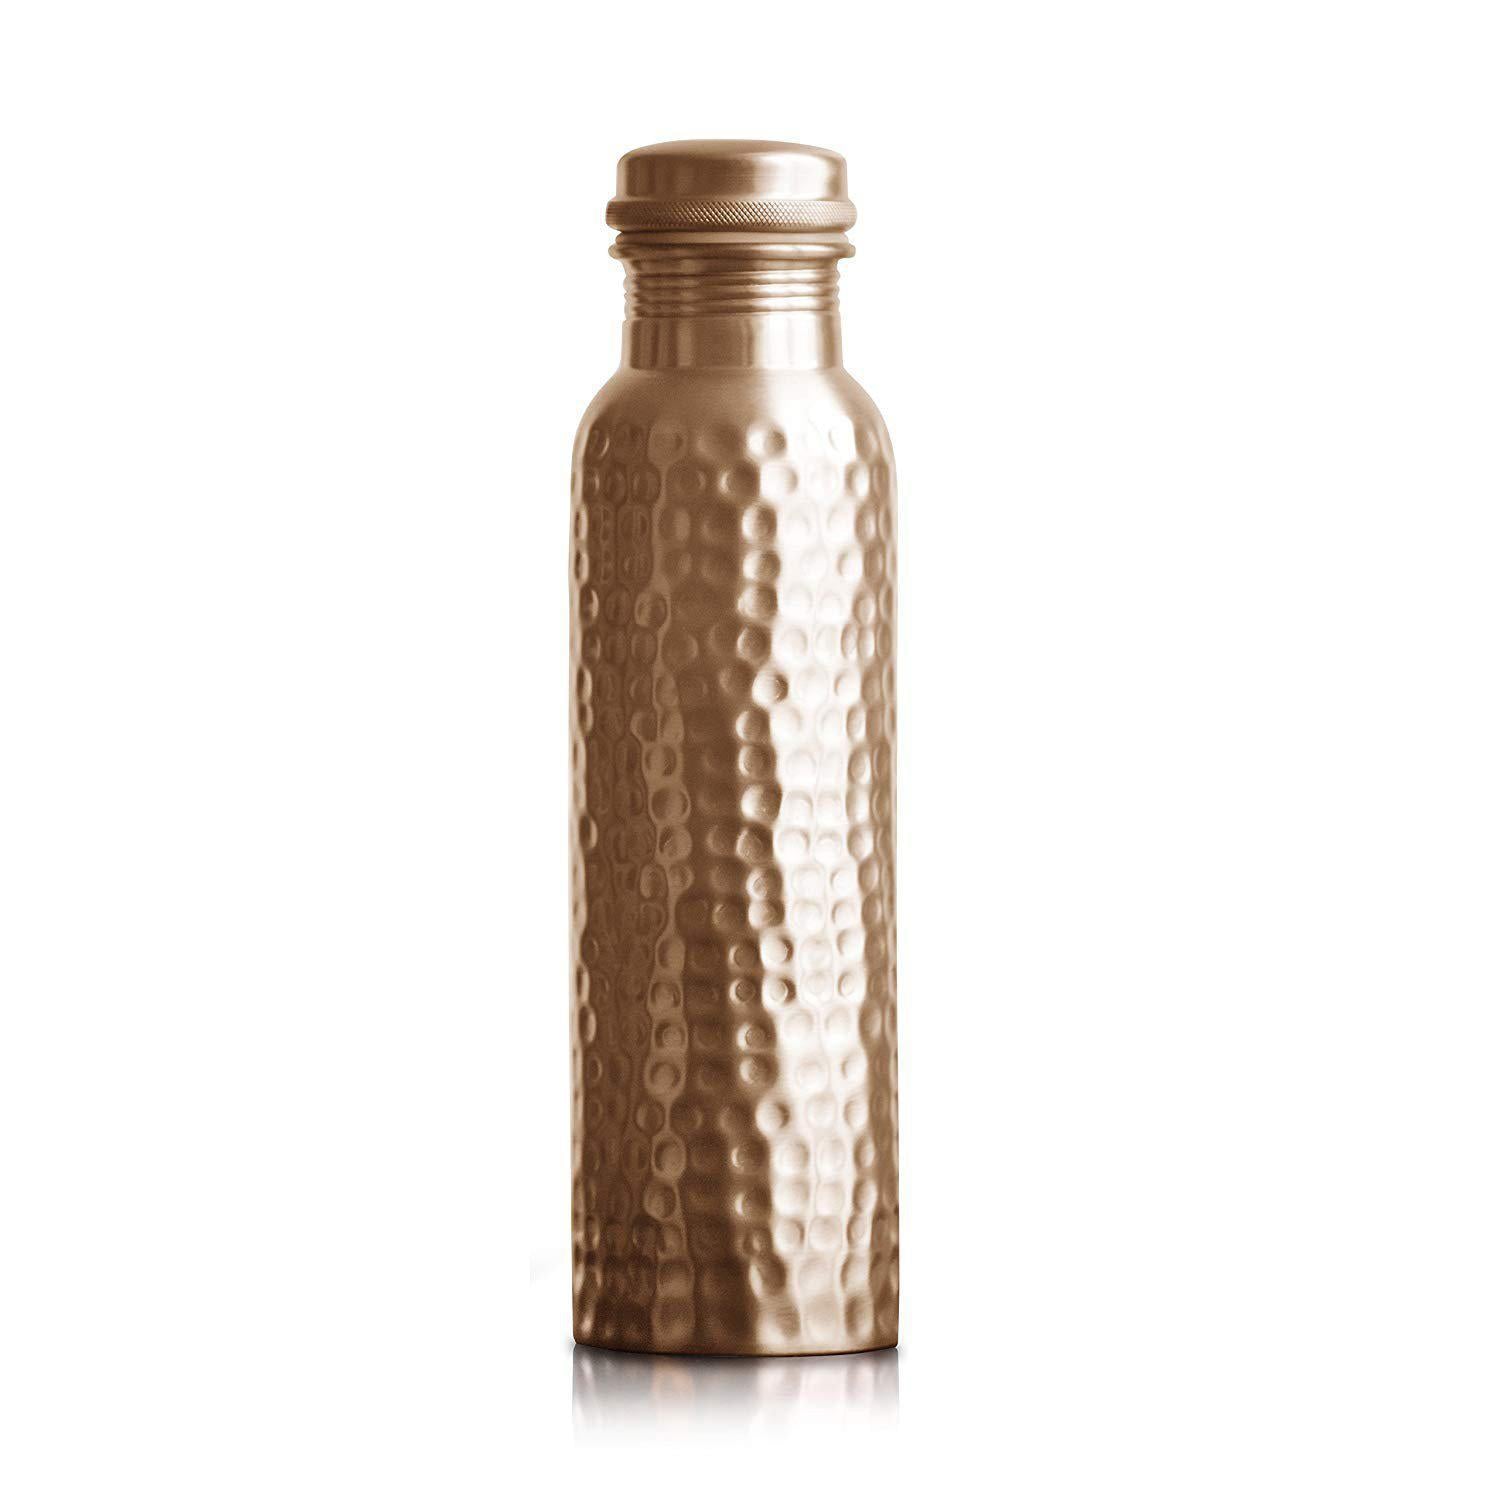 Prakti Copper Wellness Water Bottle: 100% Pure Copper for Hydration